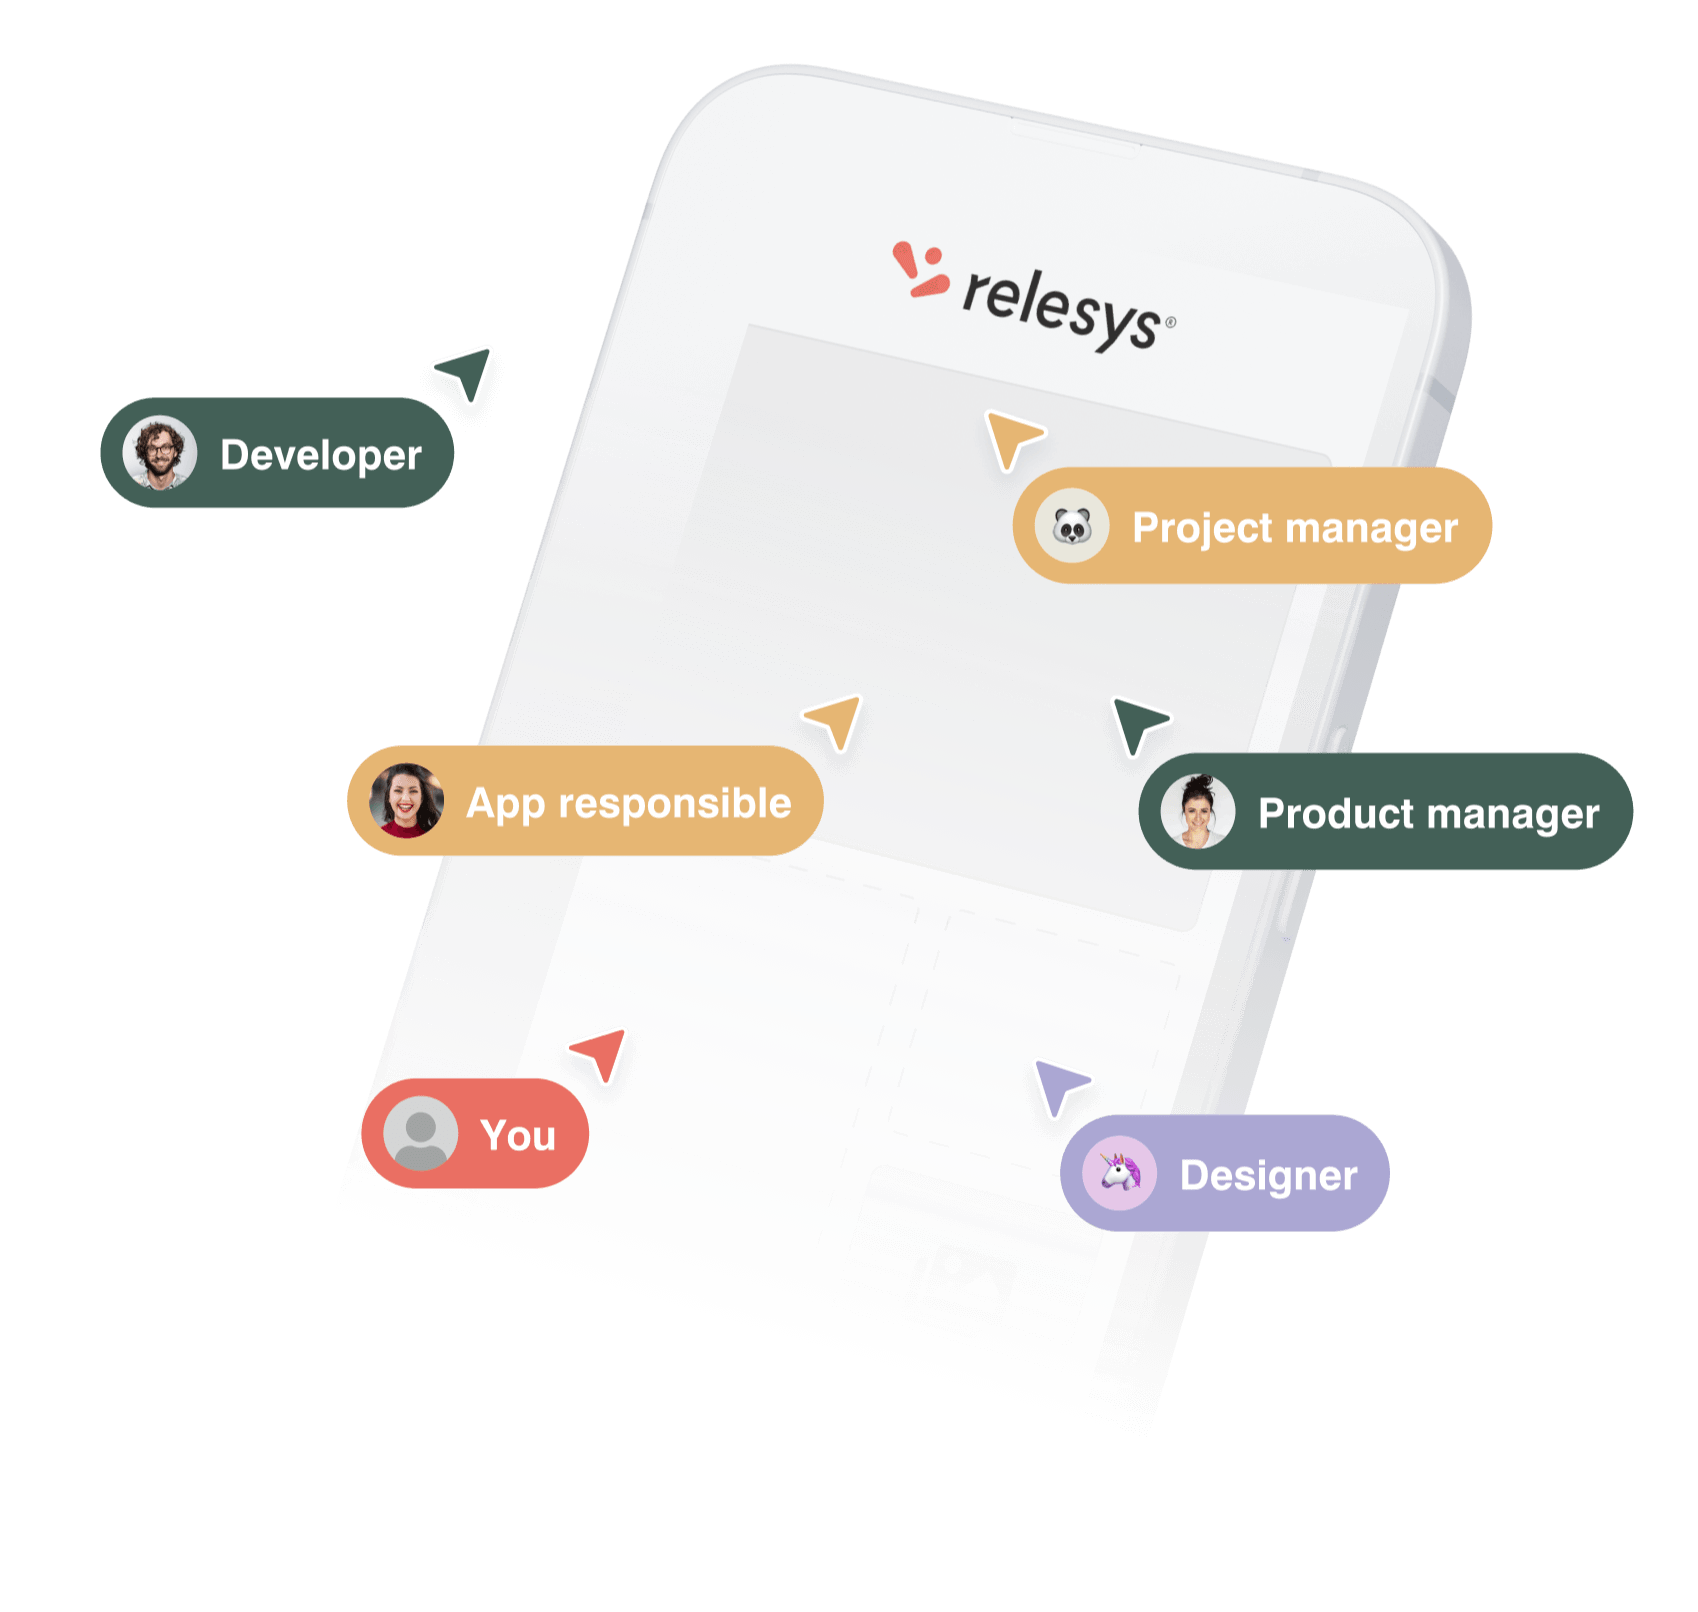 relesys-platform-collaboration